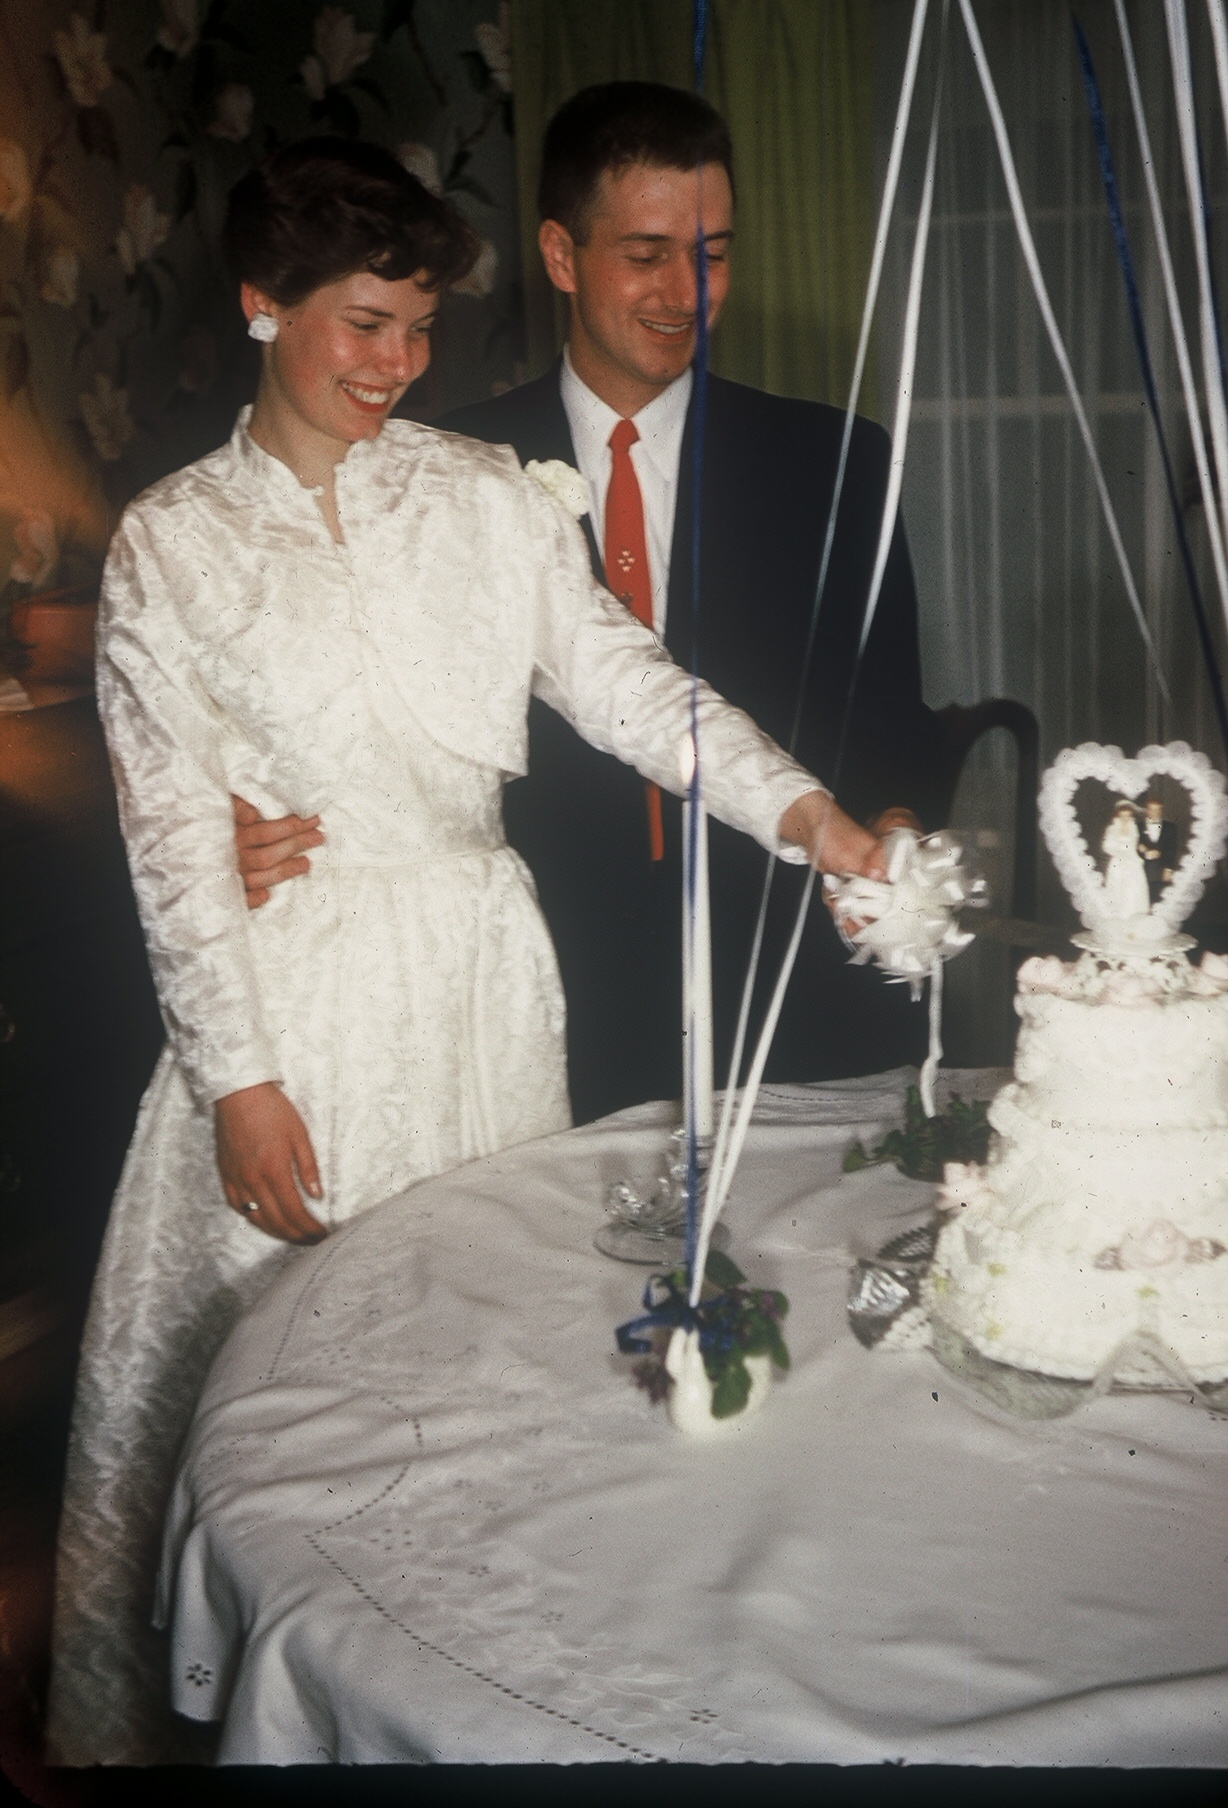 Howard and Kay Wedding Cake.jpg